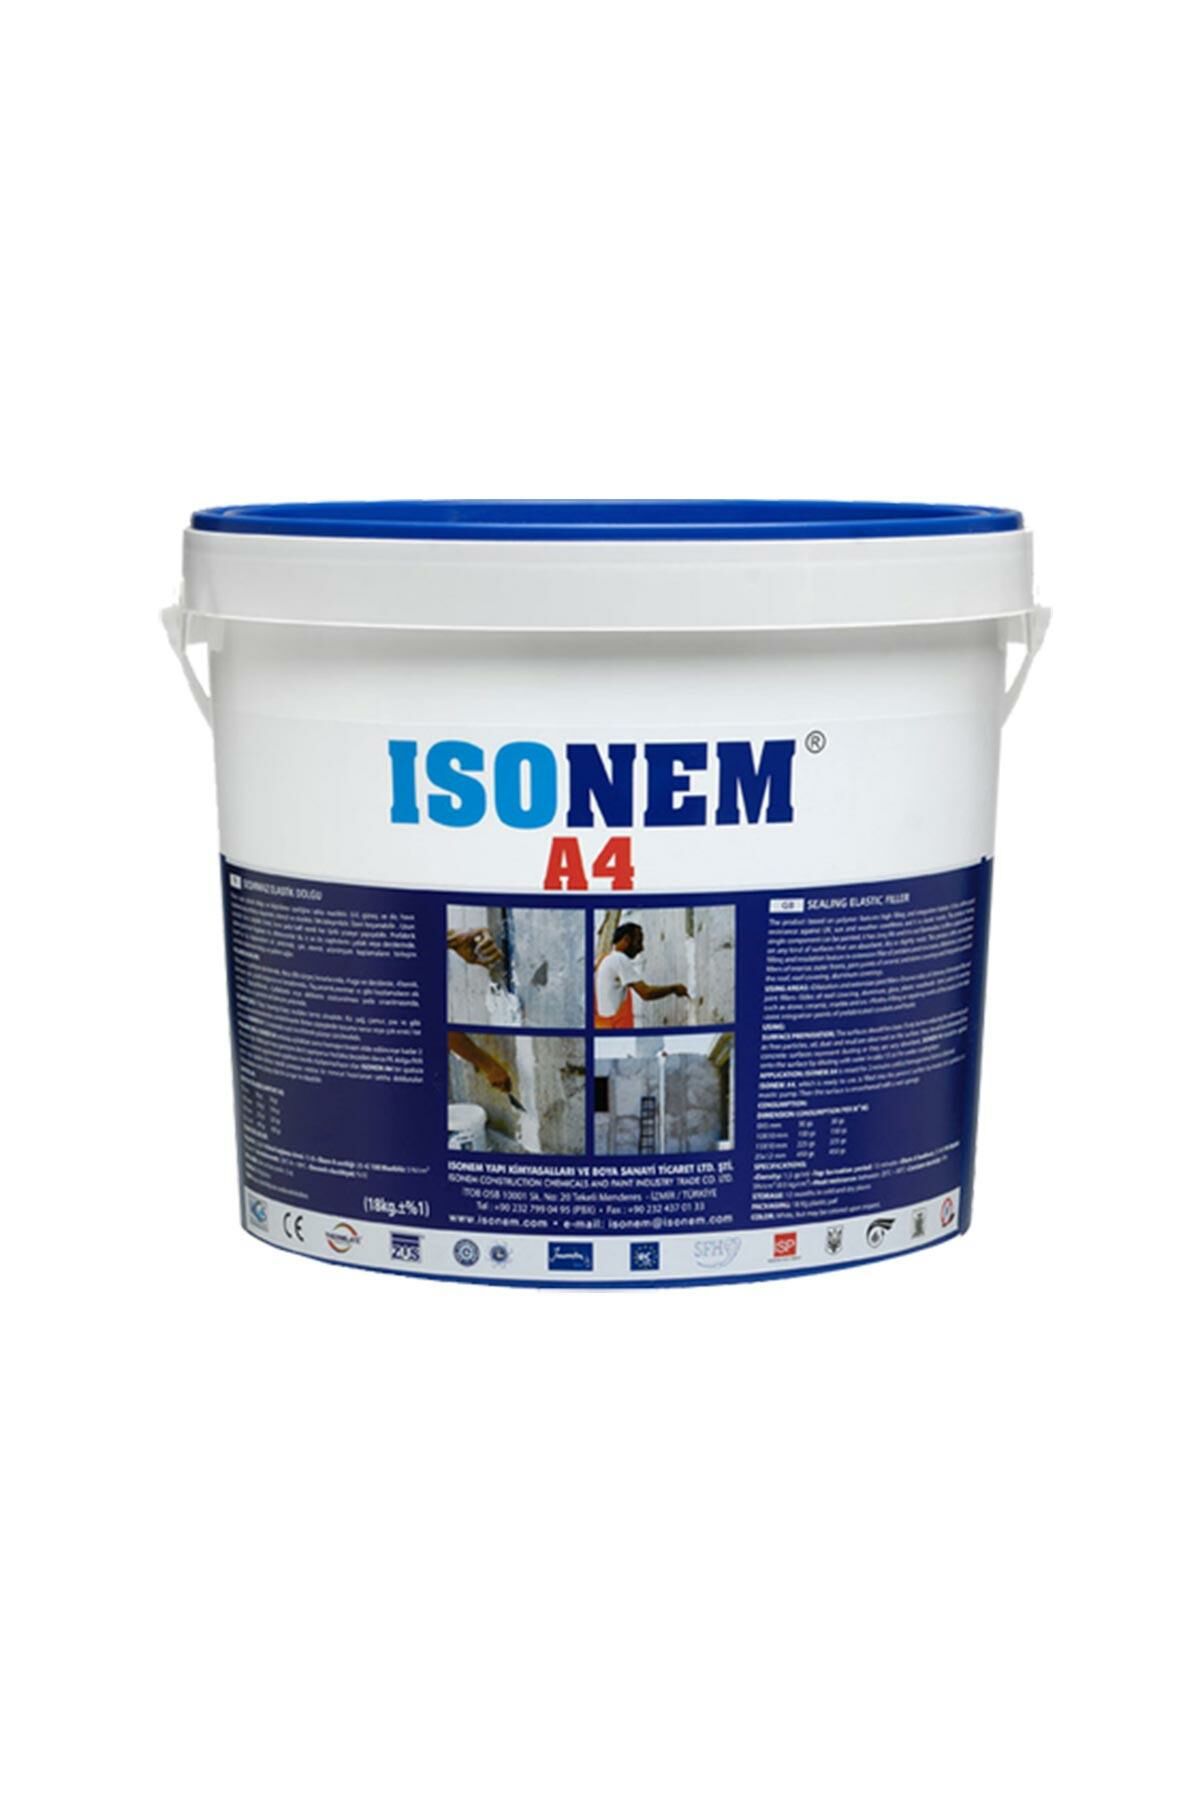 Isonem A4 Polimer Esaslı Dolgu ve Tamir Mastiği 18 Kg Beyaz